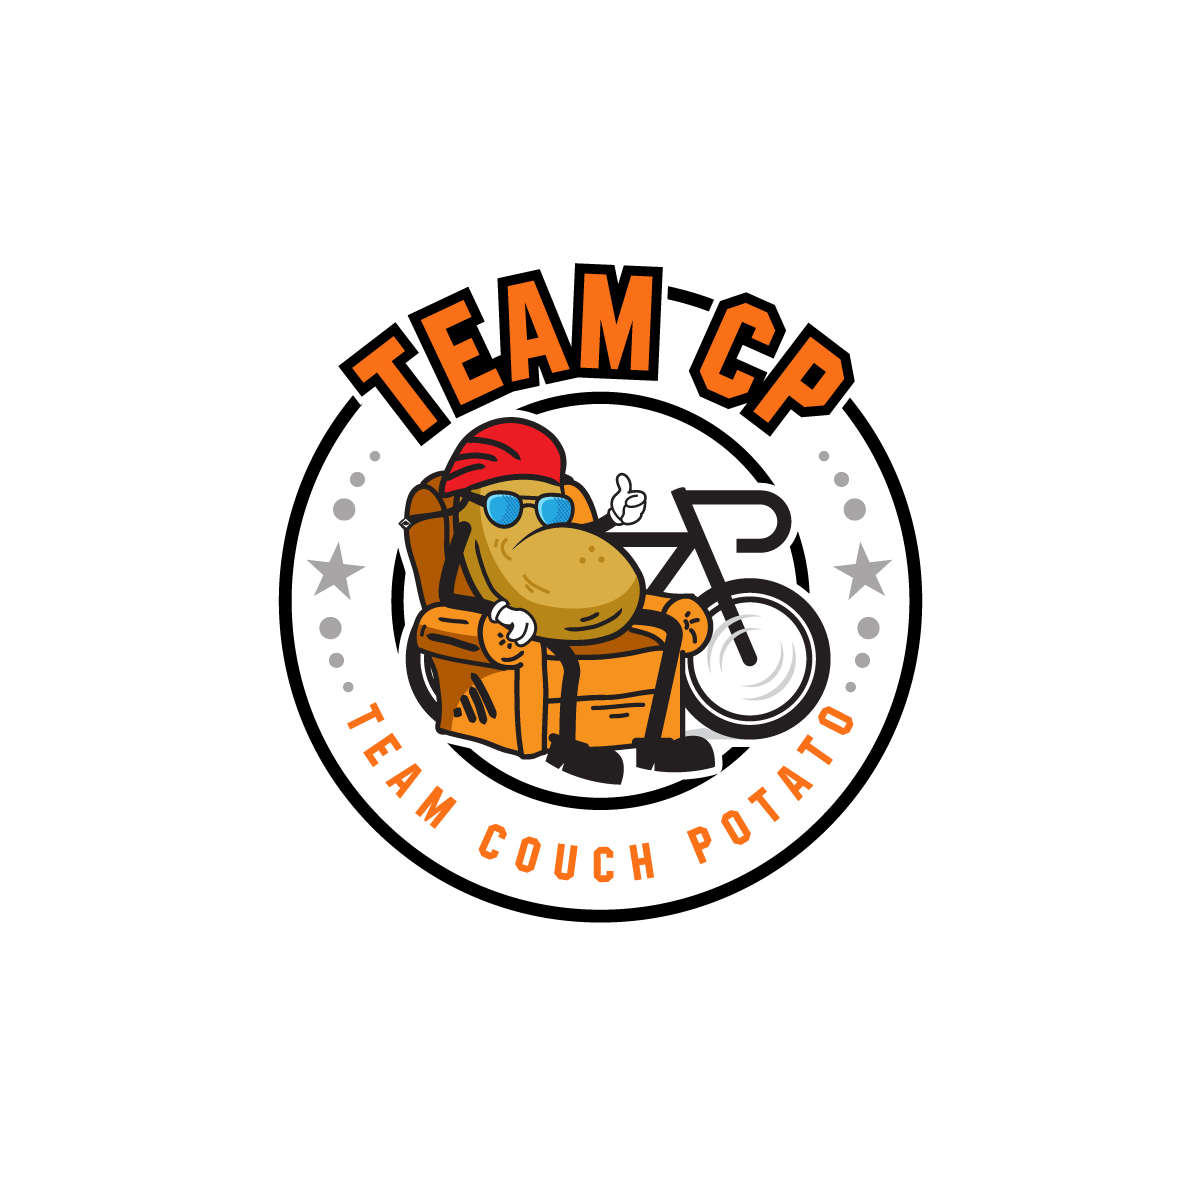 Emblem Logo Designs for Team couch